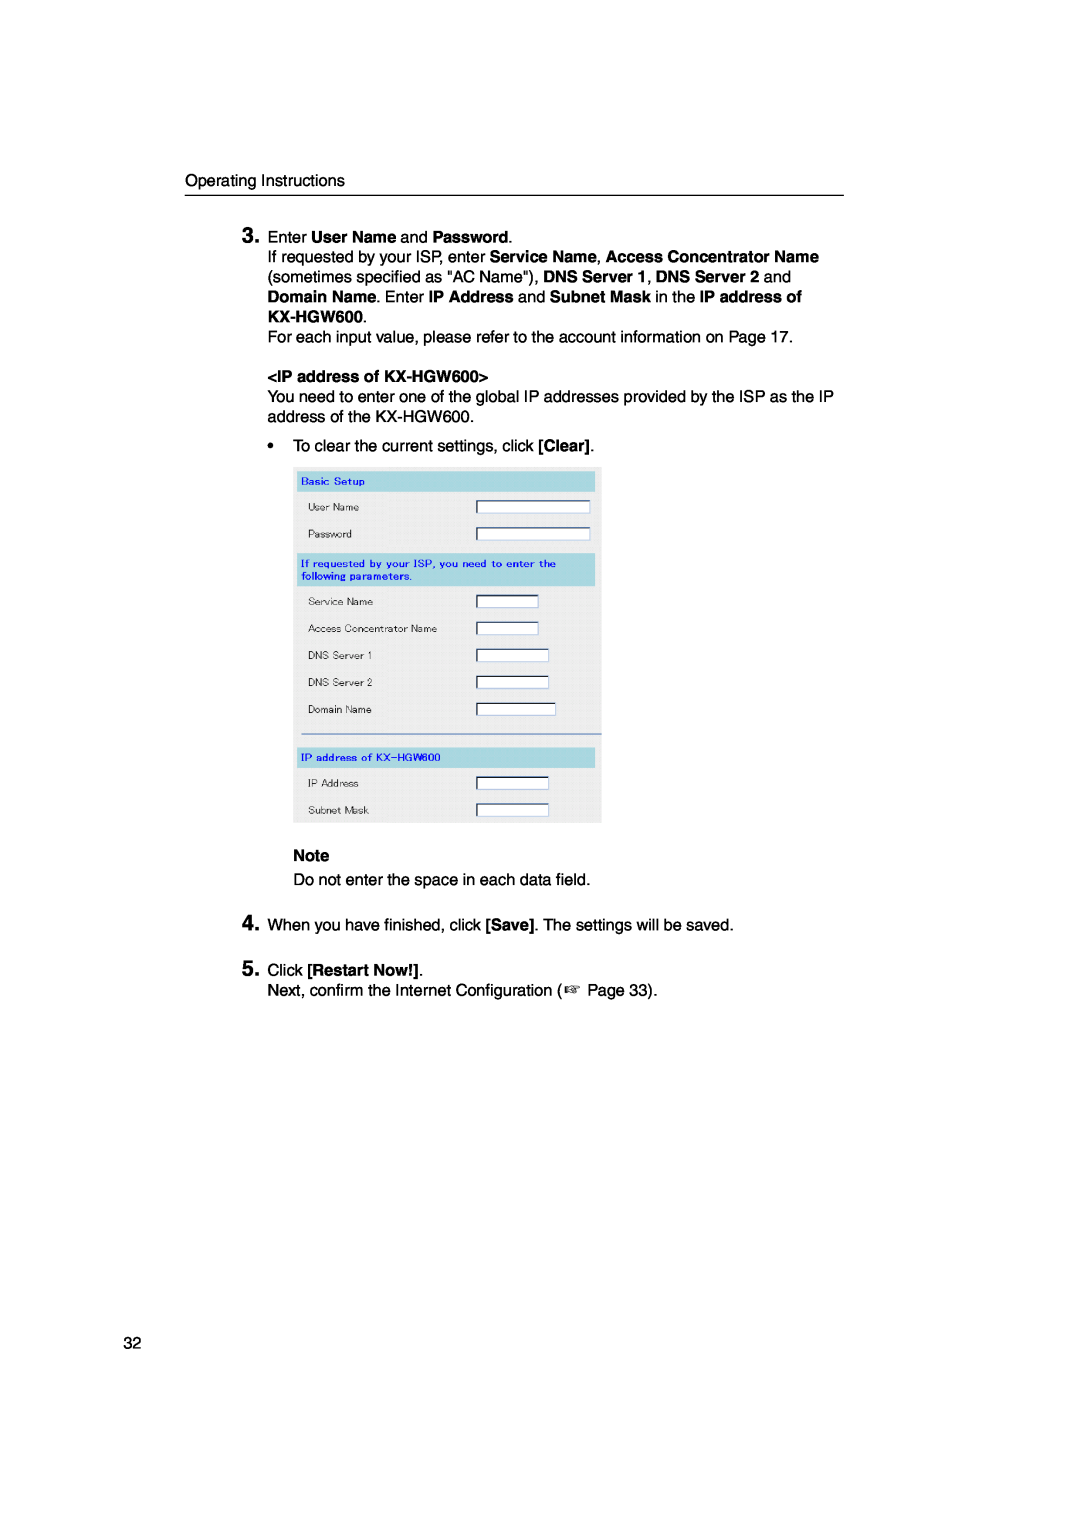 Panasonic manual Enter User Name and Password, IP address of KX-HGW600, Click Restart Now 